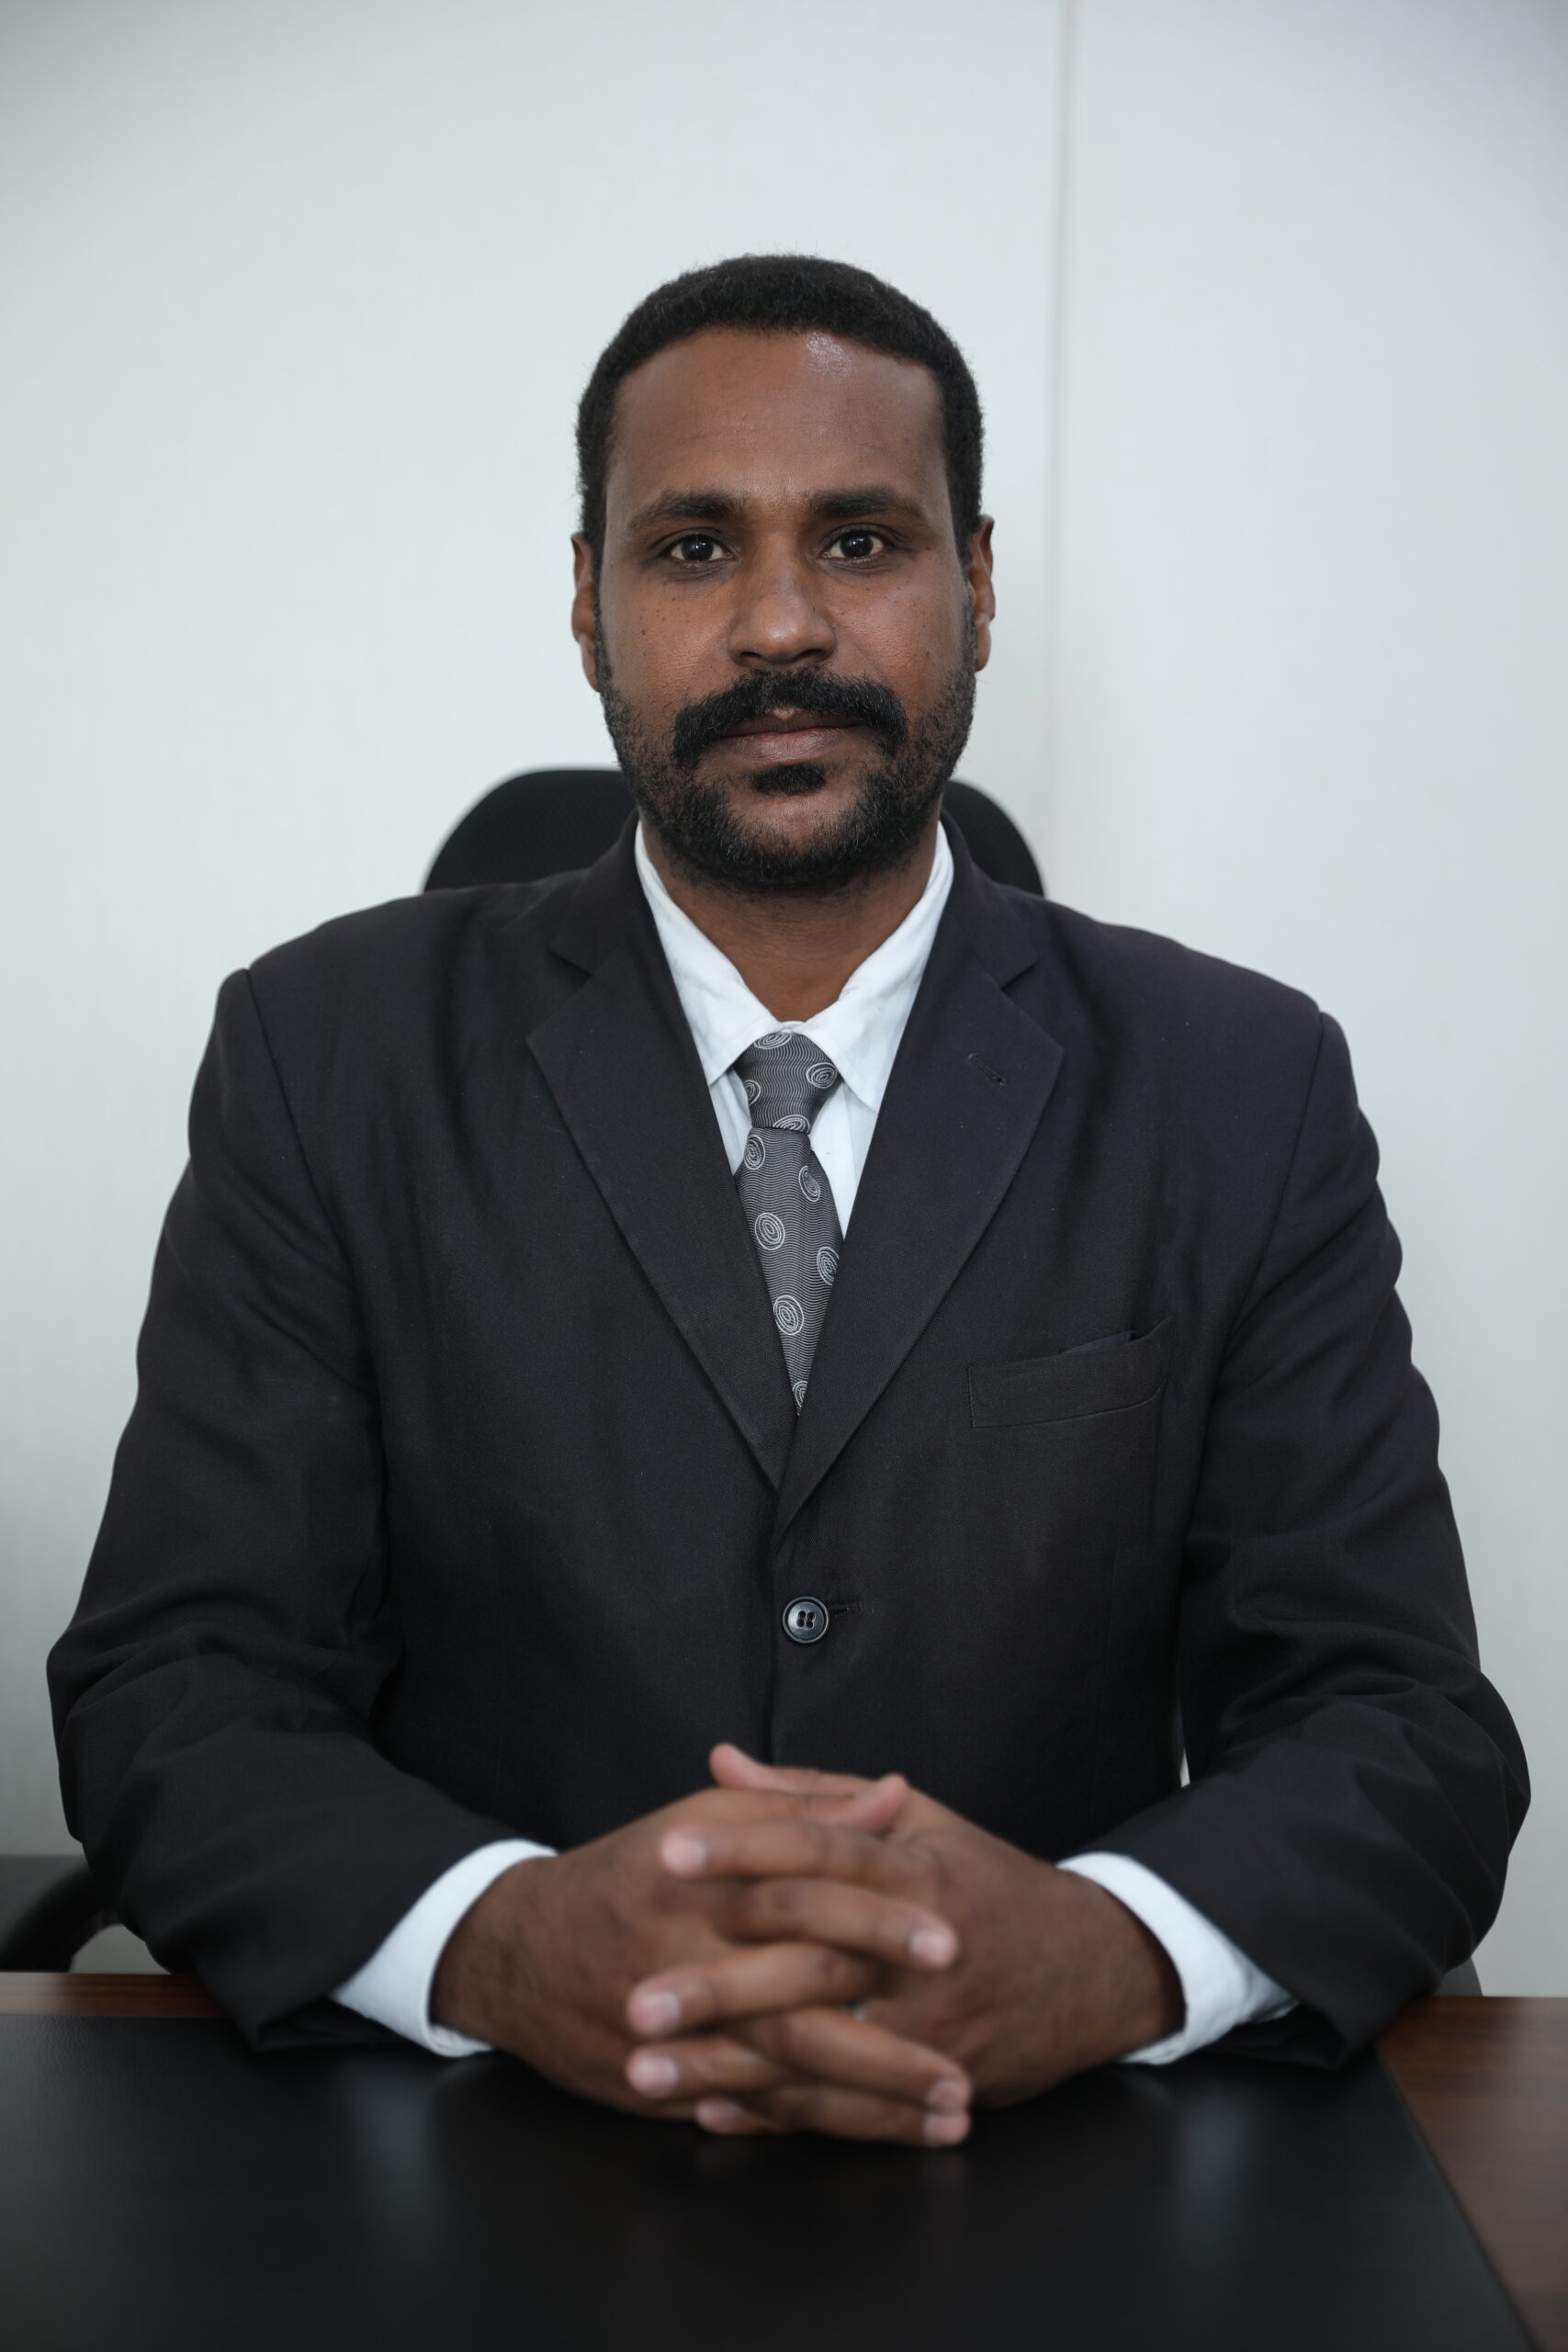 E3RD6574 scaled - Mr. Khatib Hassan Muhammad - Almashora Lawyer Zainab Muhammad Legal Firm Qatar, Legal Advice and Arbitration